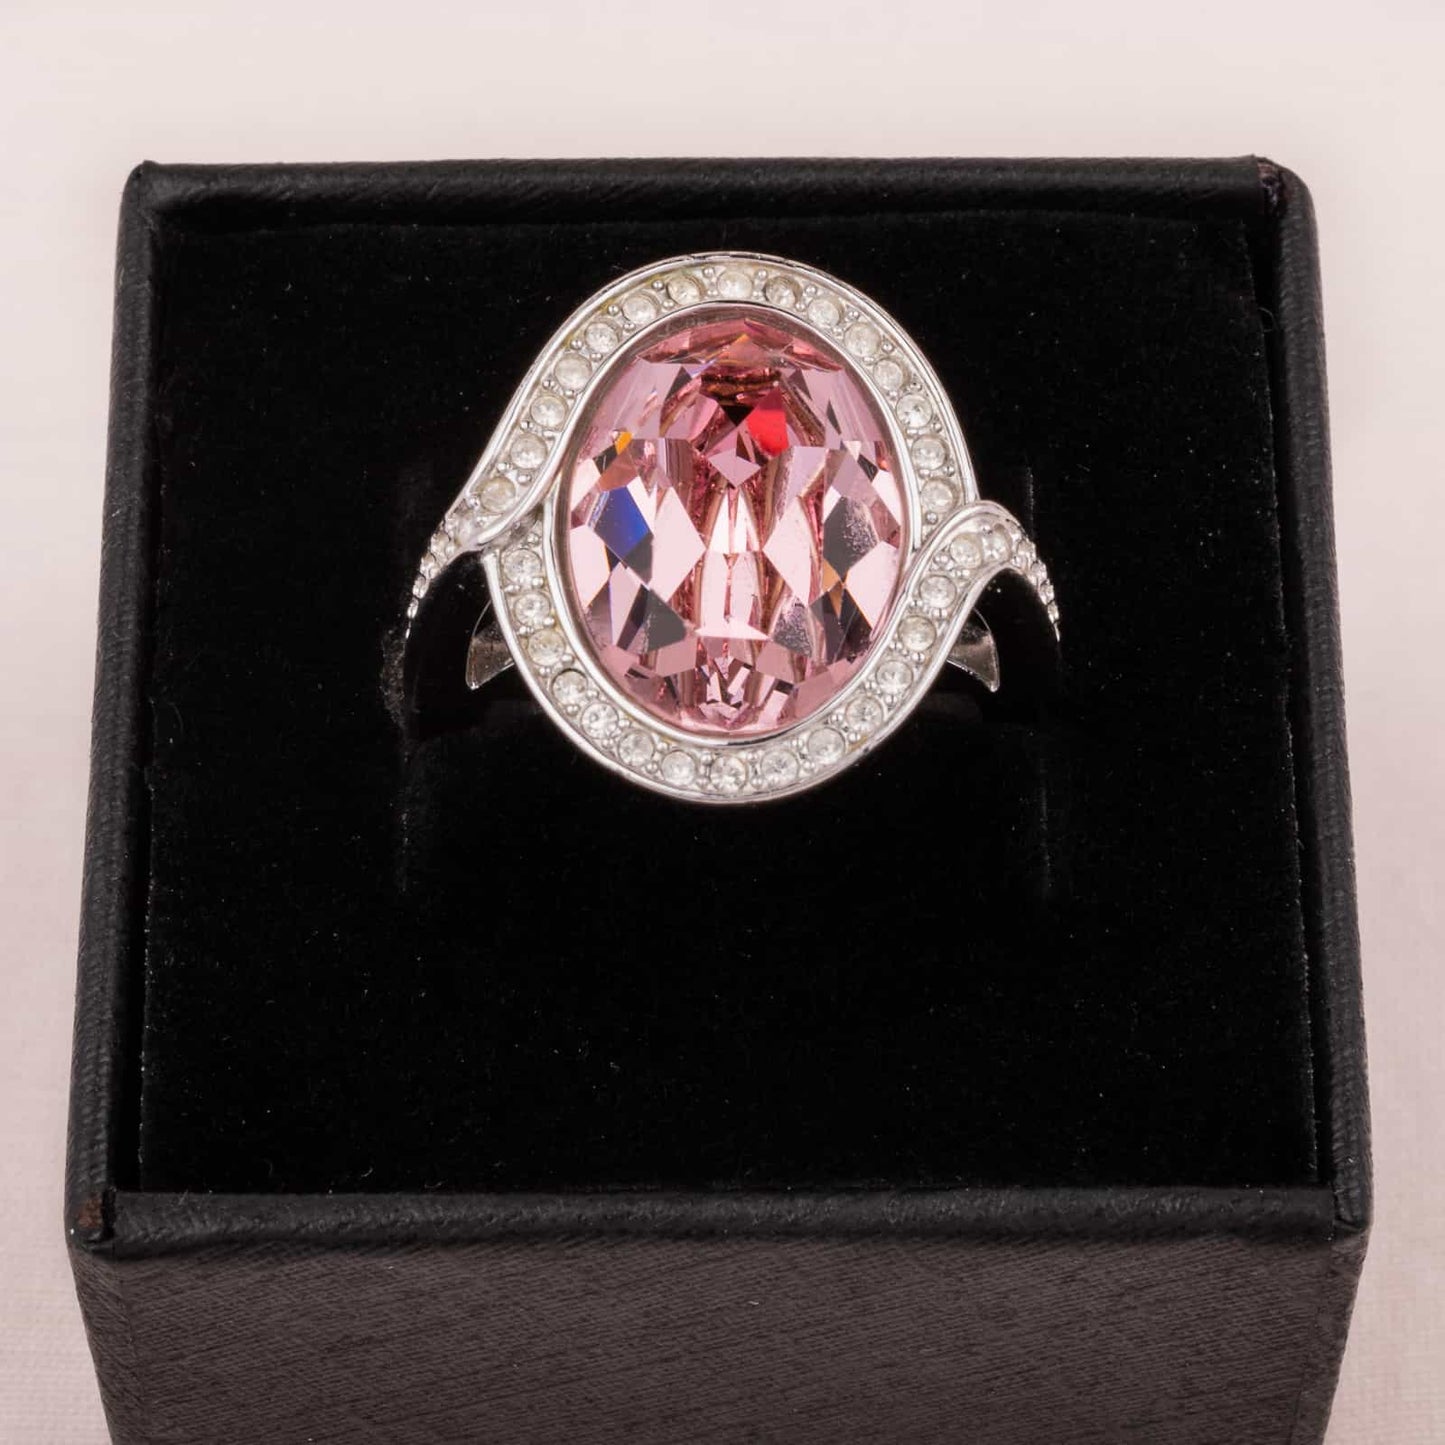 SWAROVSKI ring Vintage – Beauty pink Find crystal with